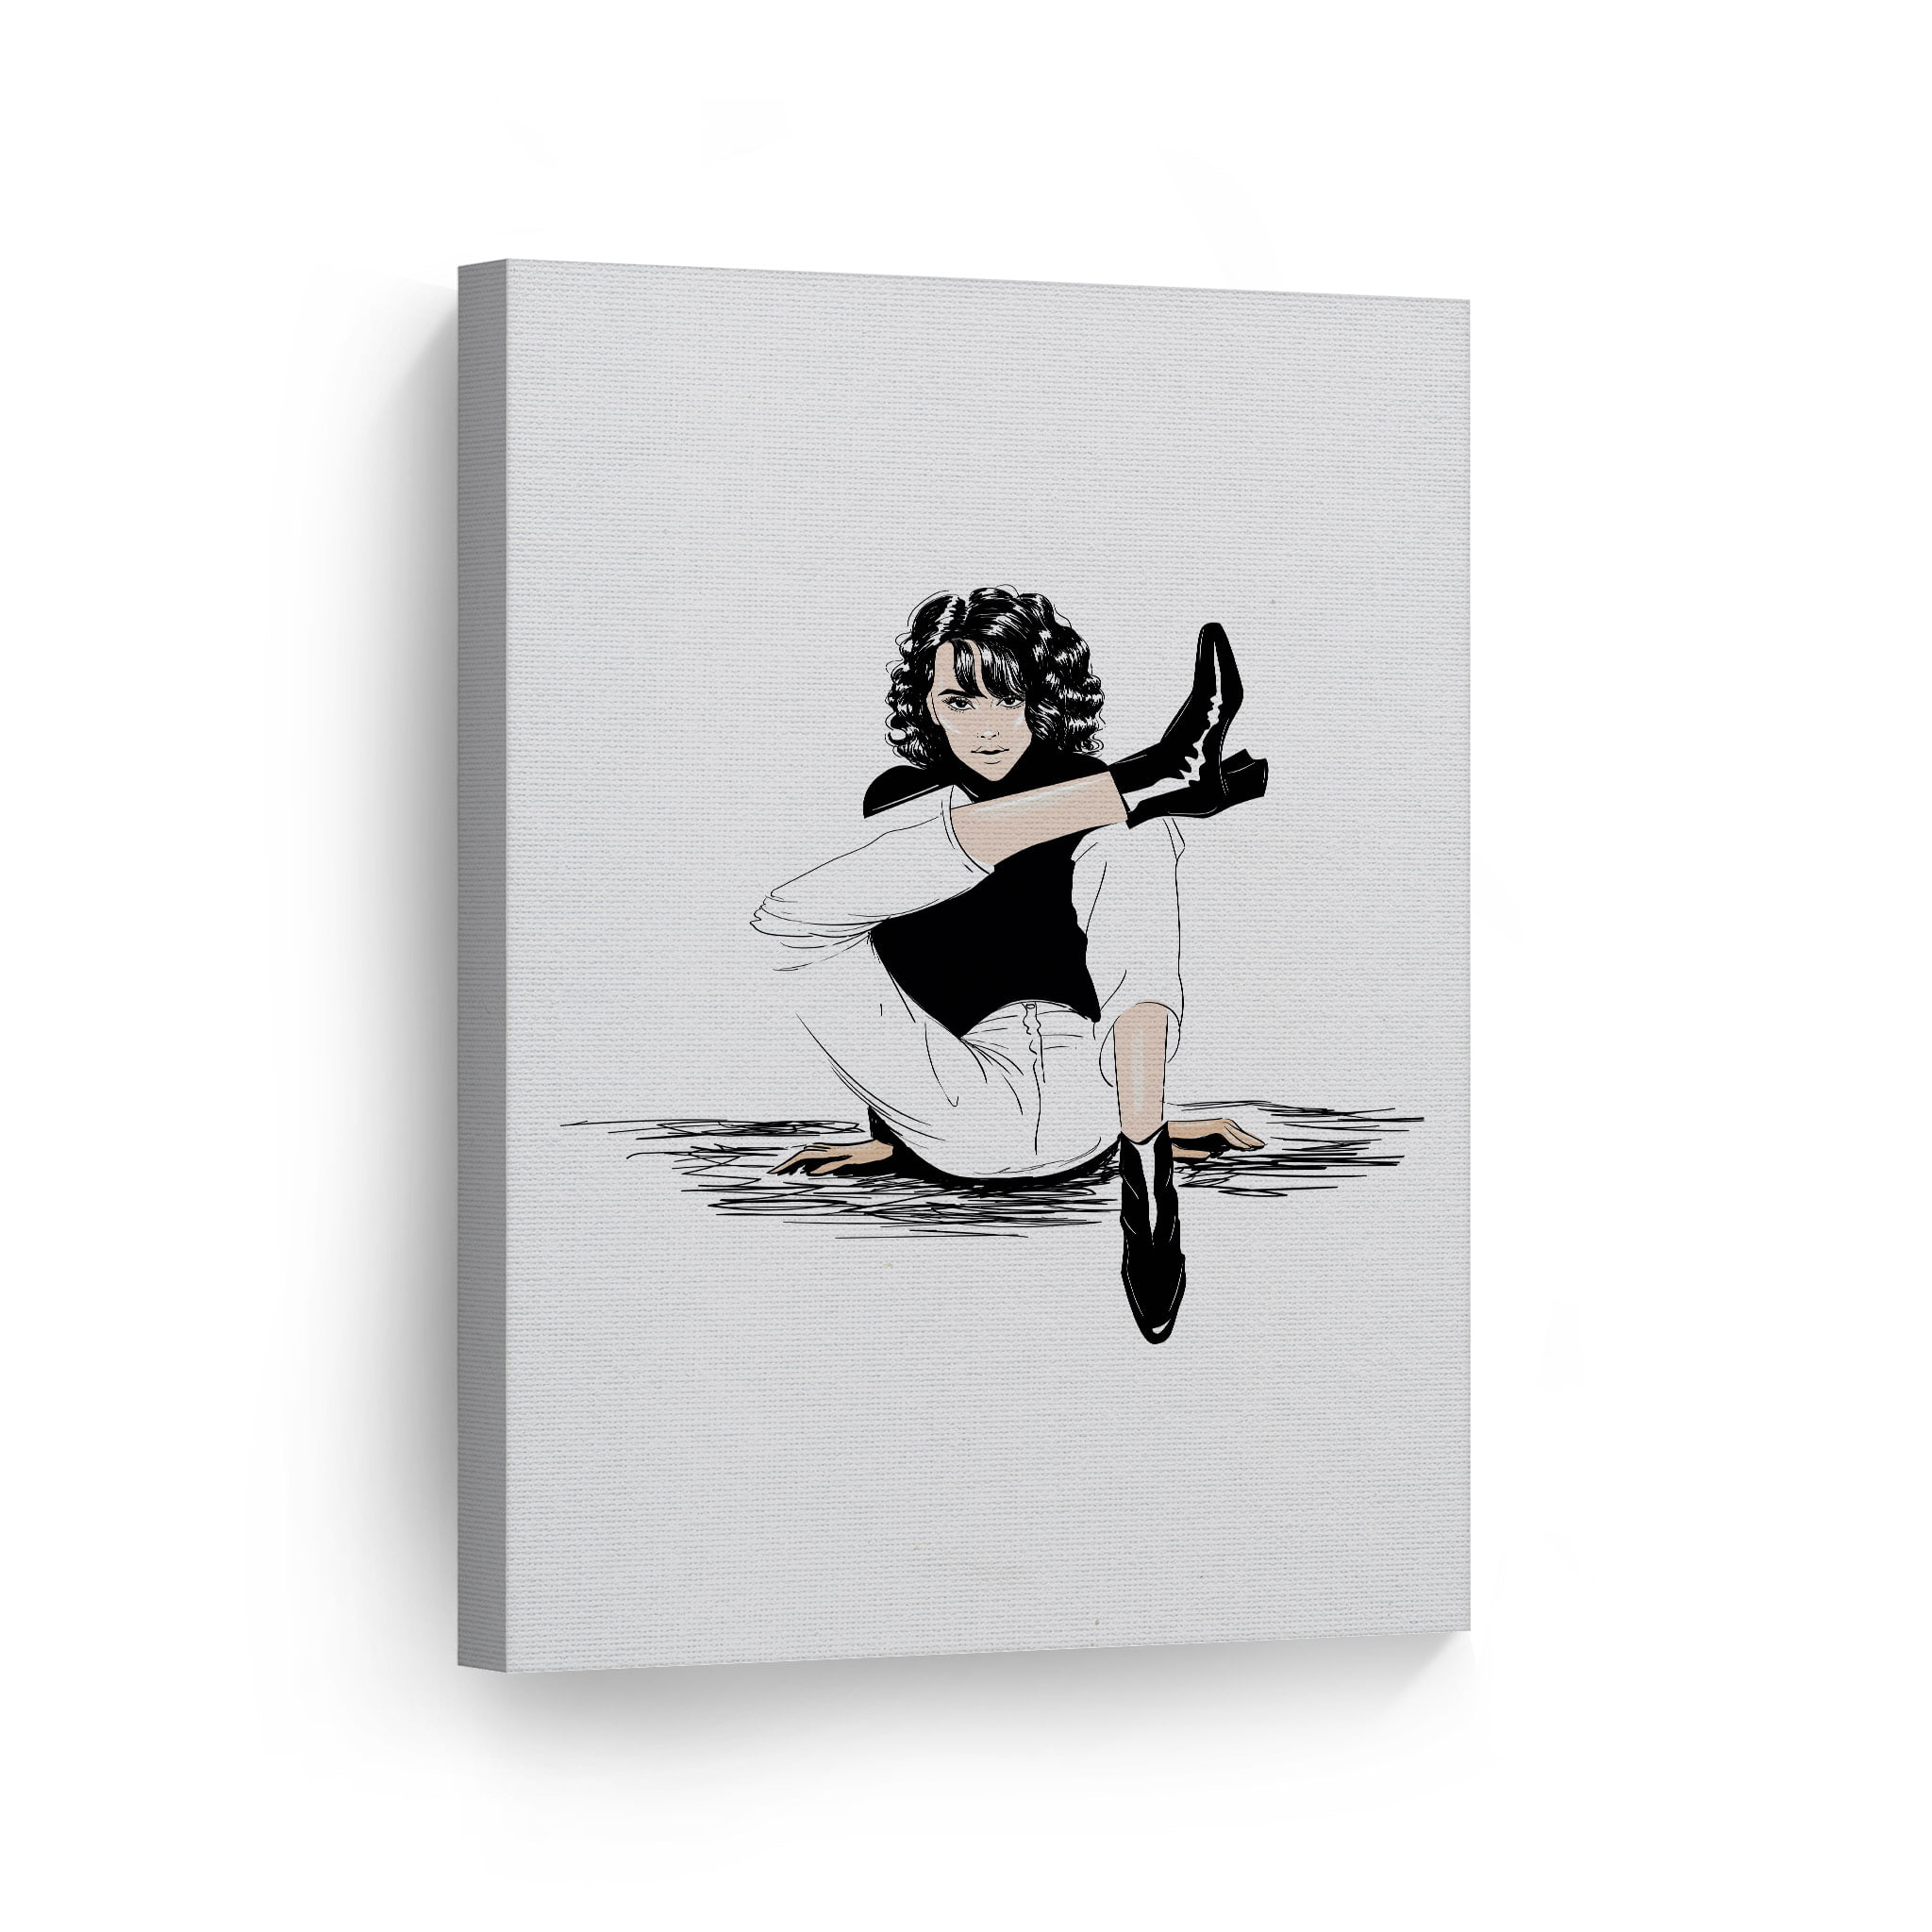 Smile Art Design Black and White Modern Woman Black Boots Sketch